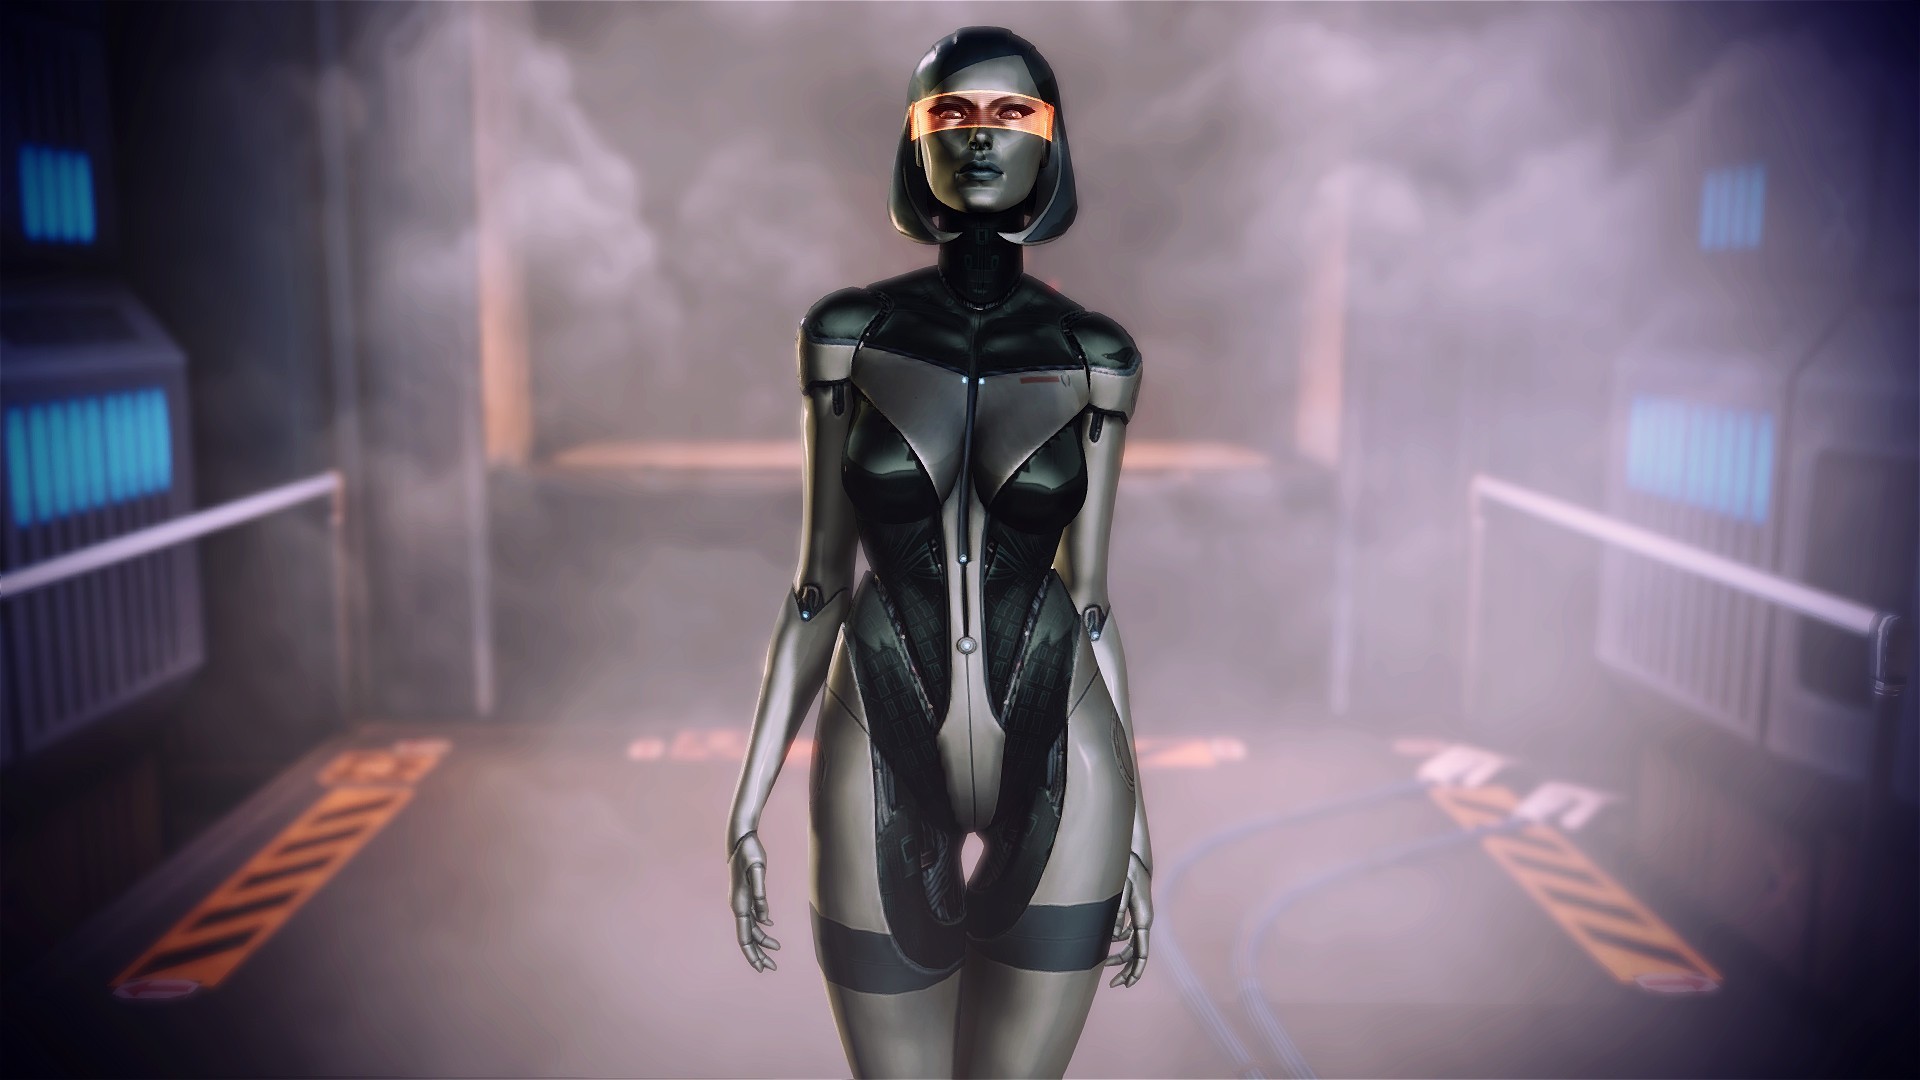 General 1920x1080 Mass Effect EDI video games science fiction women science fiction PC gaming video game art video game girls CGI